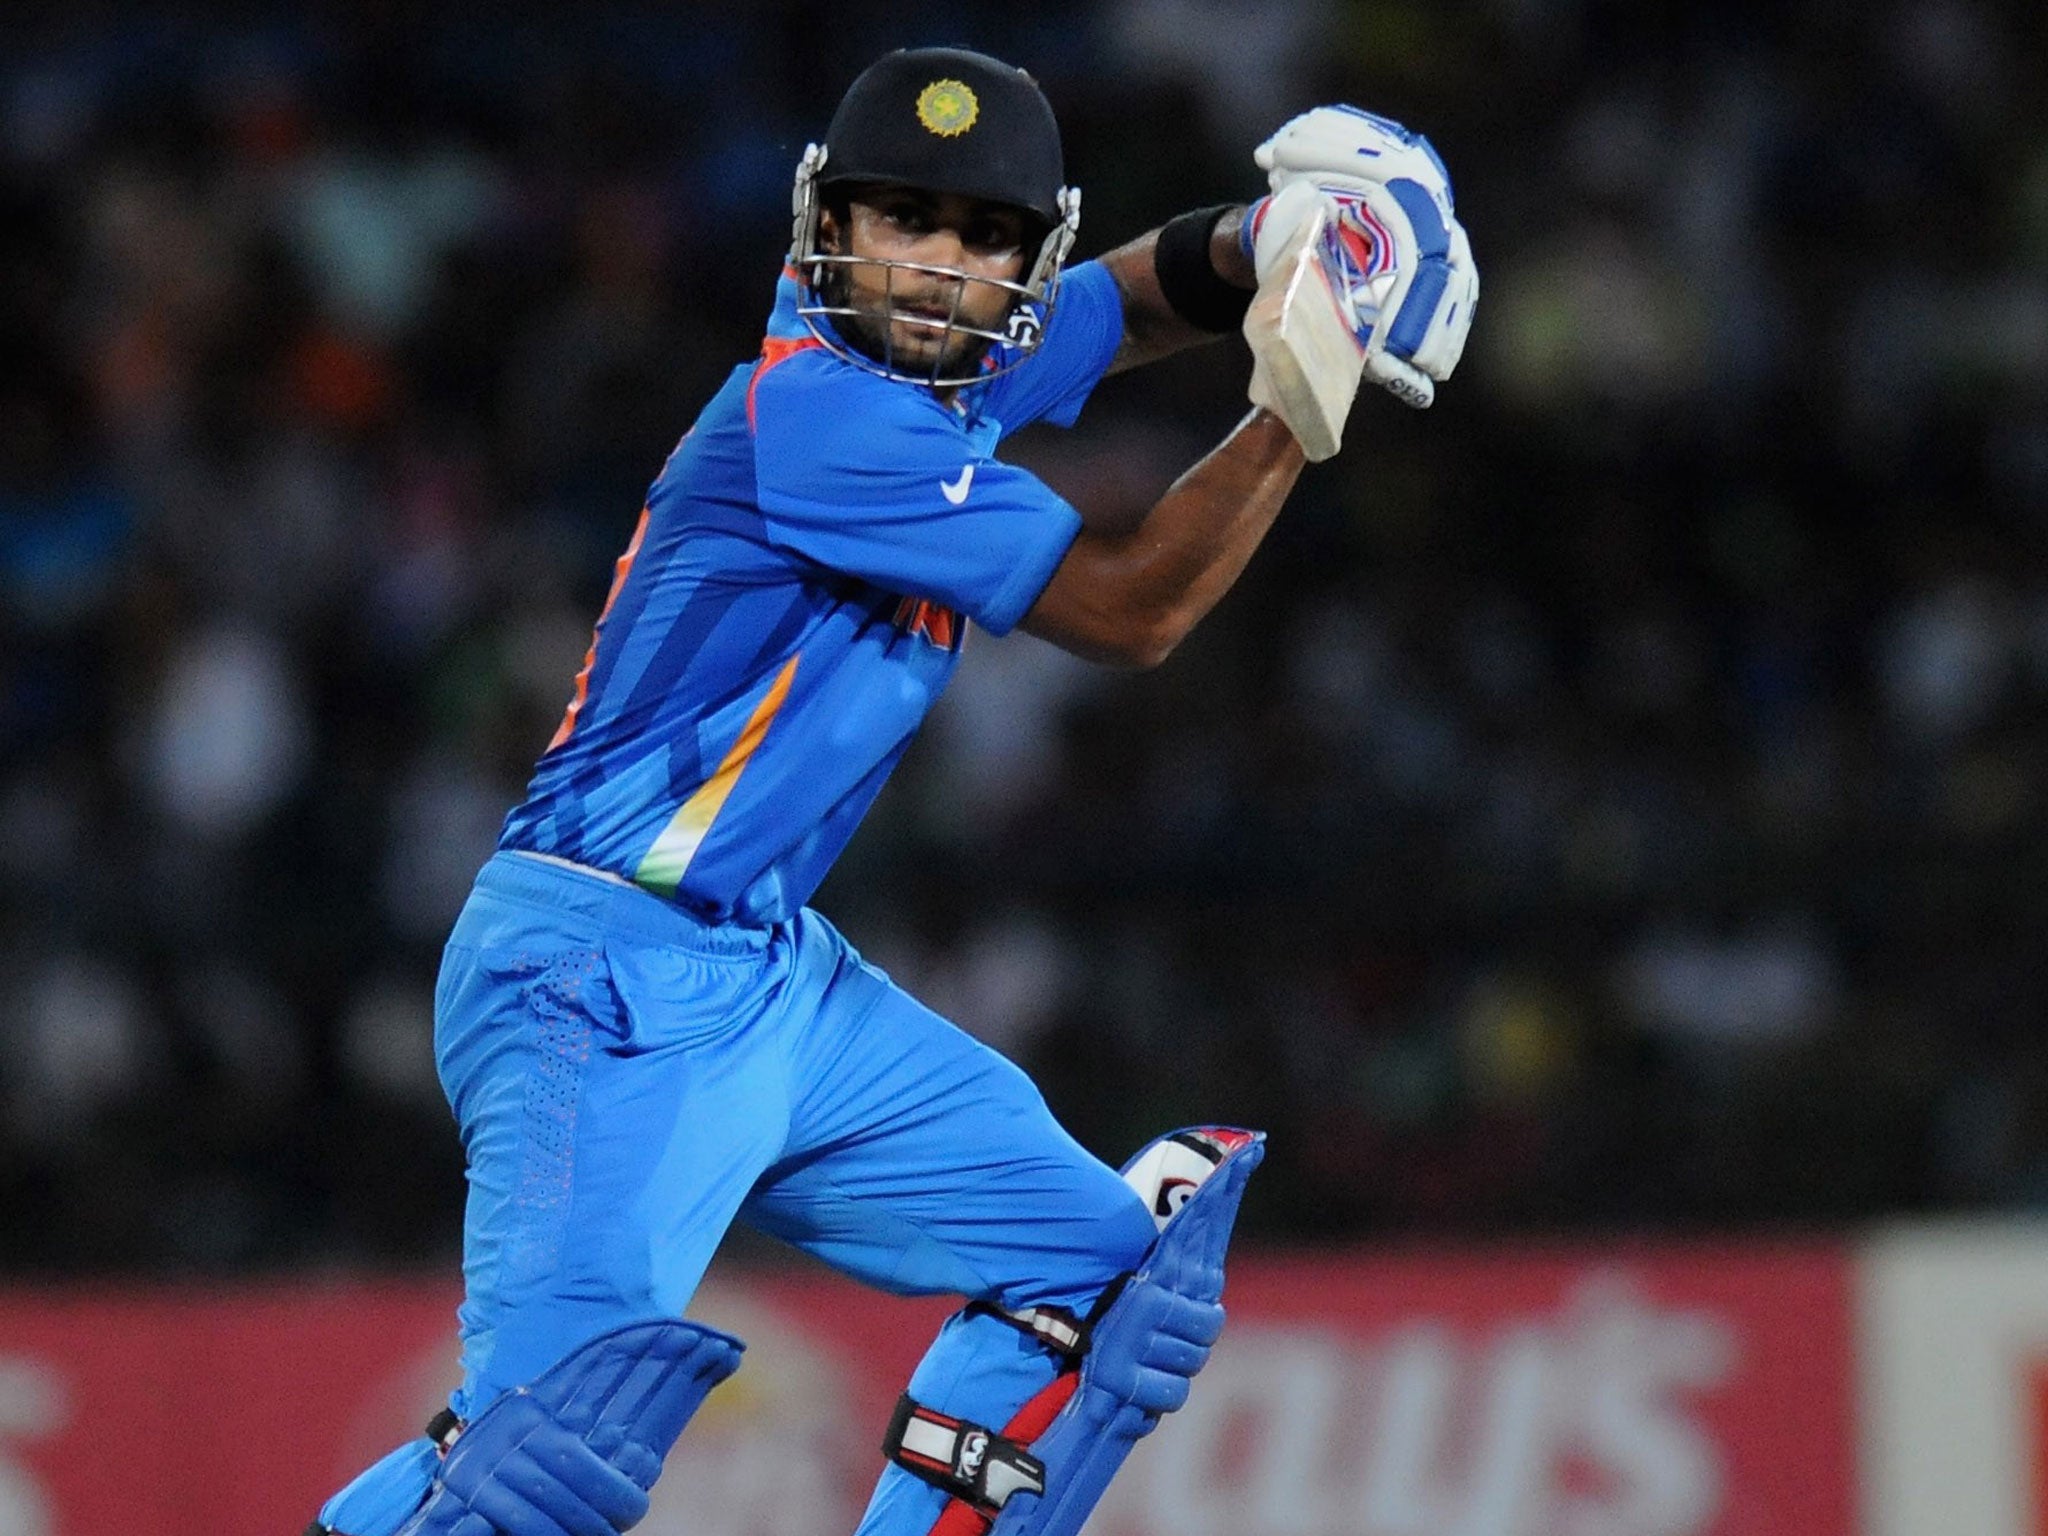 King Kohli: Virat Kohli’s 77 runs helped India to take the lead in the series